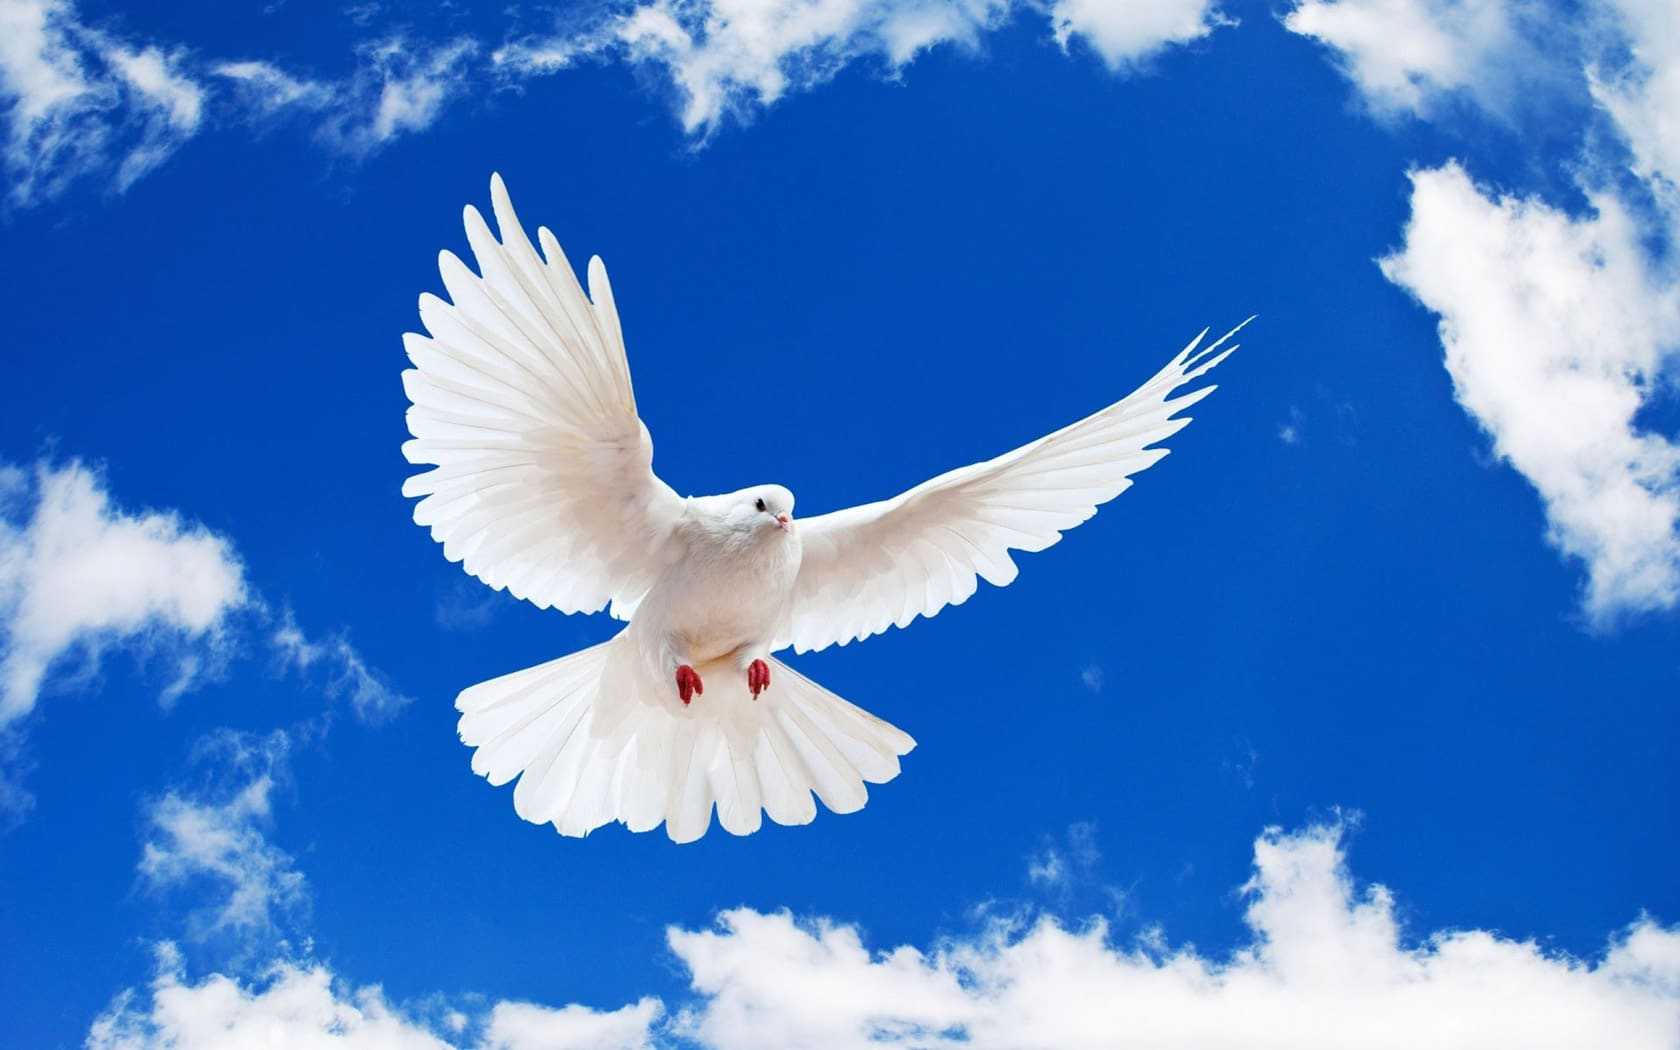 international day of peace logo